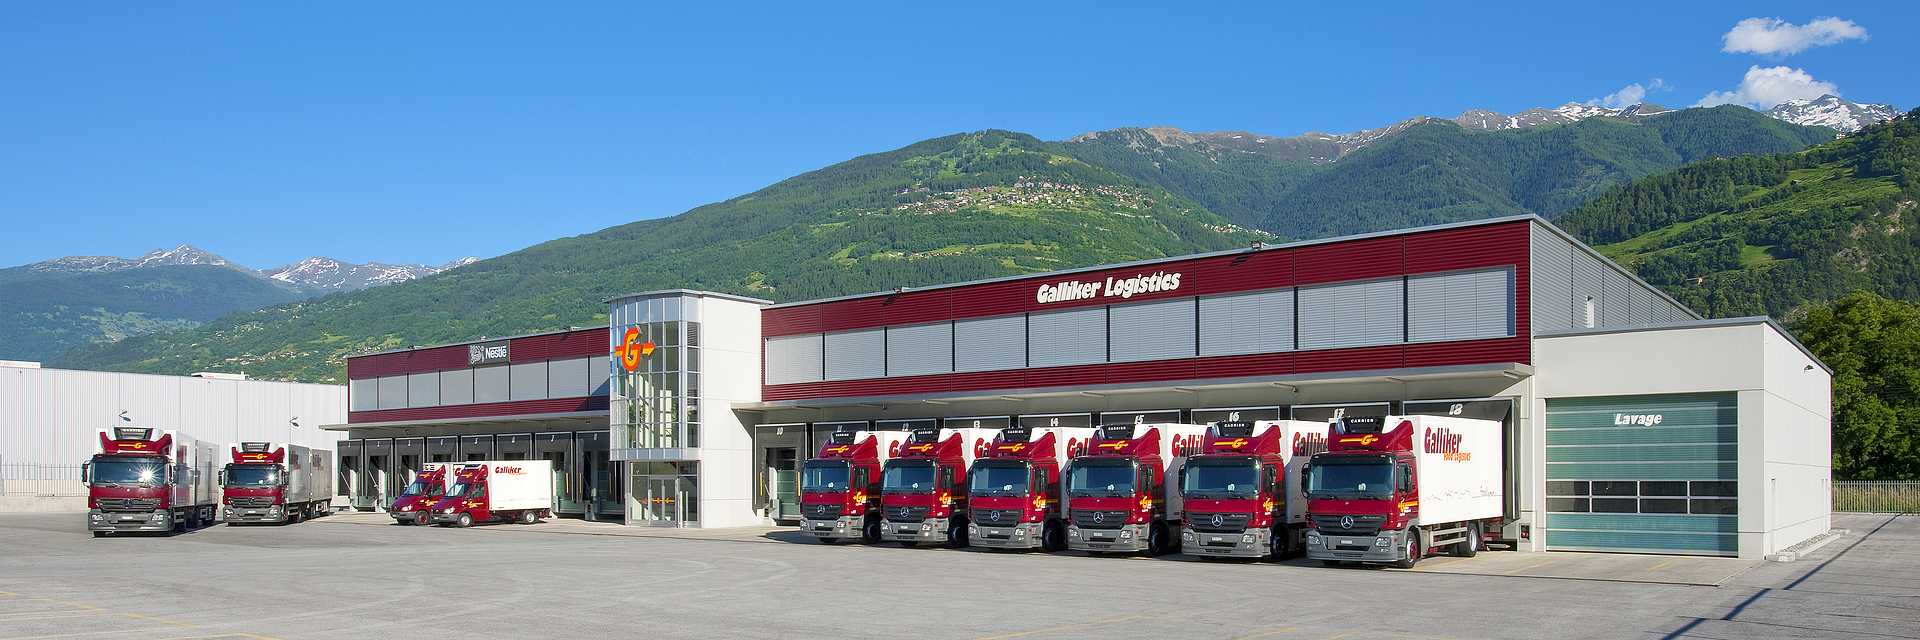 Galliker Transport Logistik TopPicture 036